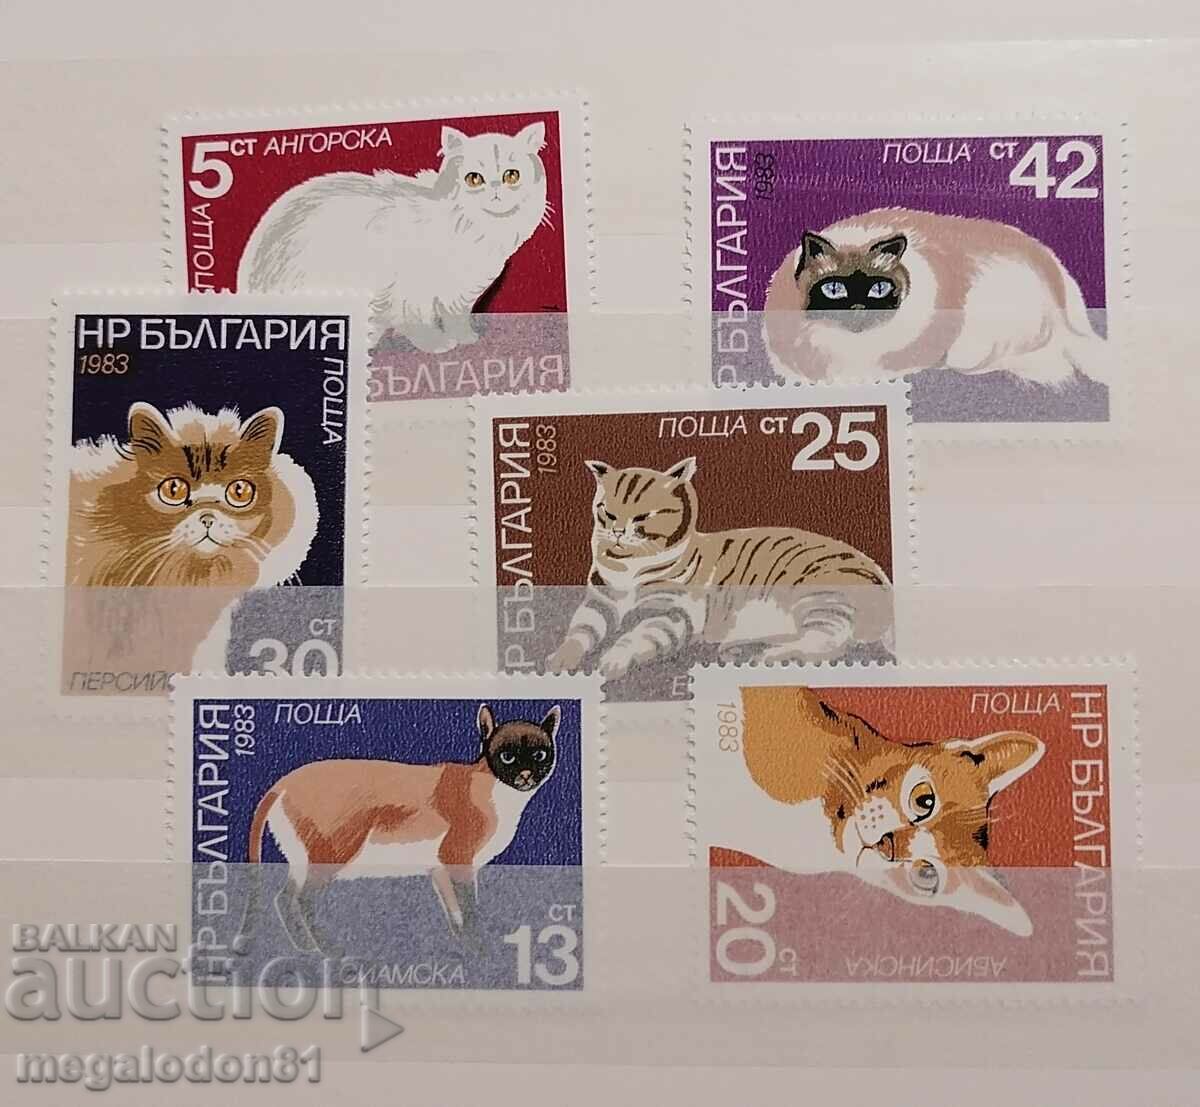 Bulgaria - domestic breeds of cats, 1983.